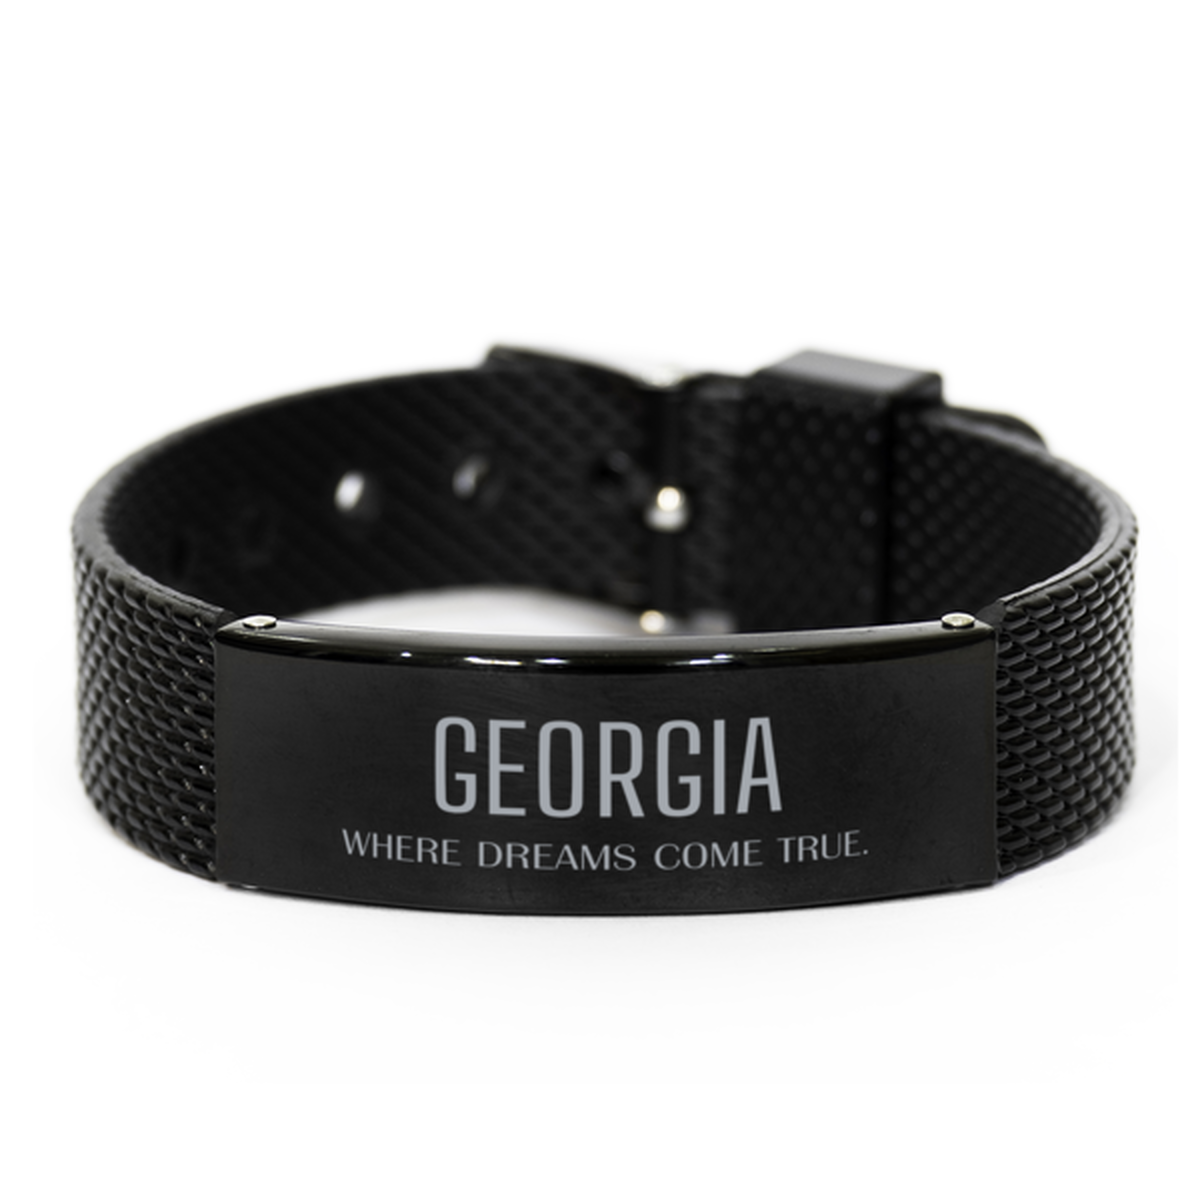 Love Georgia State Black Shark Mesh Bracelet, Georgia Where dreams come true, Birthday Inspirational Gifts For Georgia Men, Women, Friends